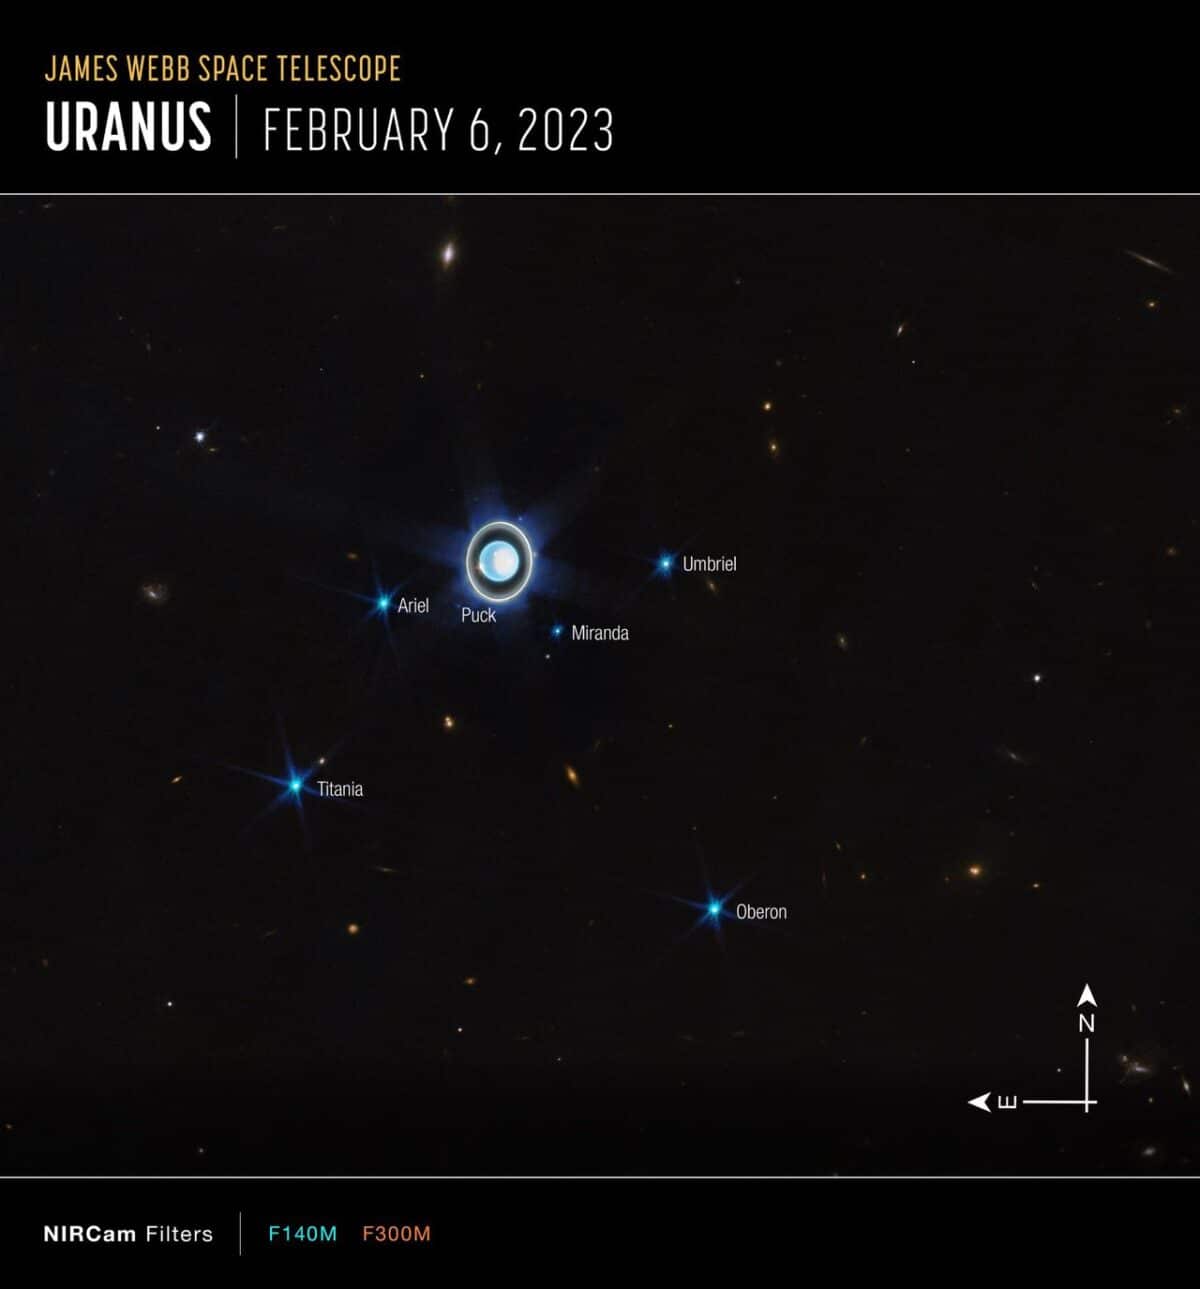 Uranus with moons